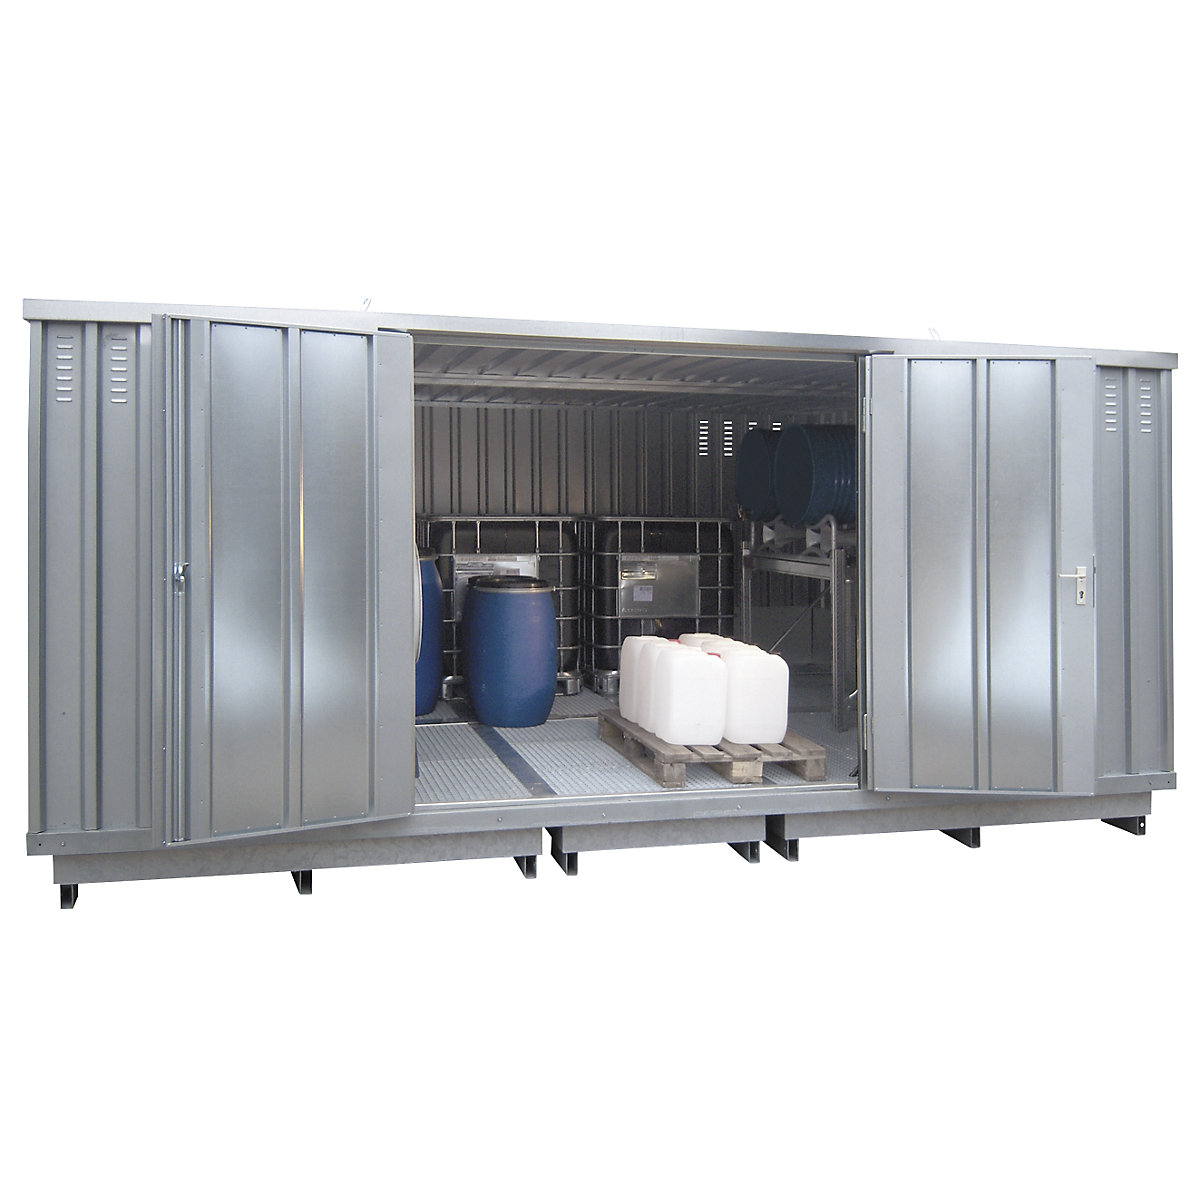 Hazardous goods storage container for water hazardous media – LaCont